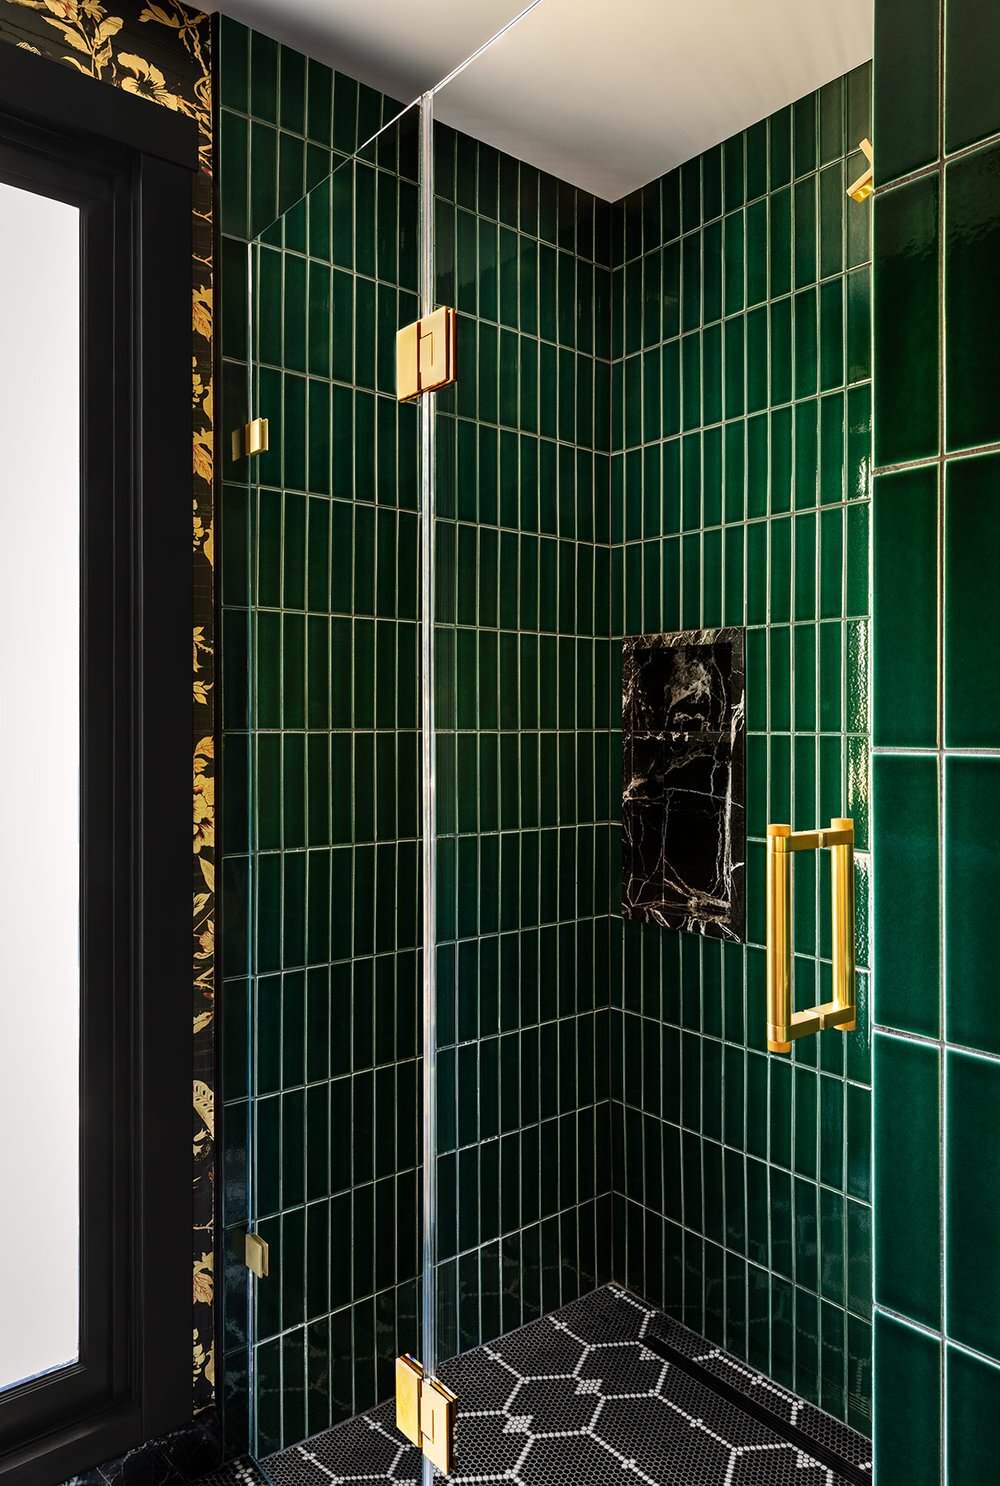 Ванная комната в зеленых цветах: 78 идей на фото дизайна интерьера от malino-v.ru | malino-v.ru